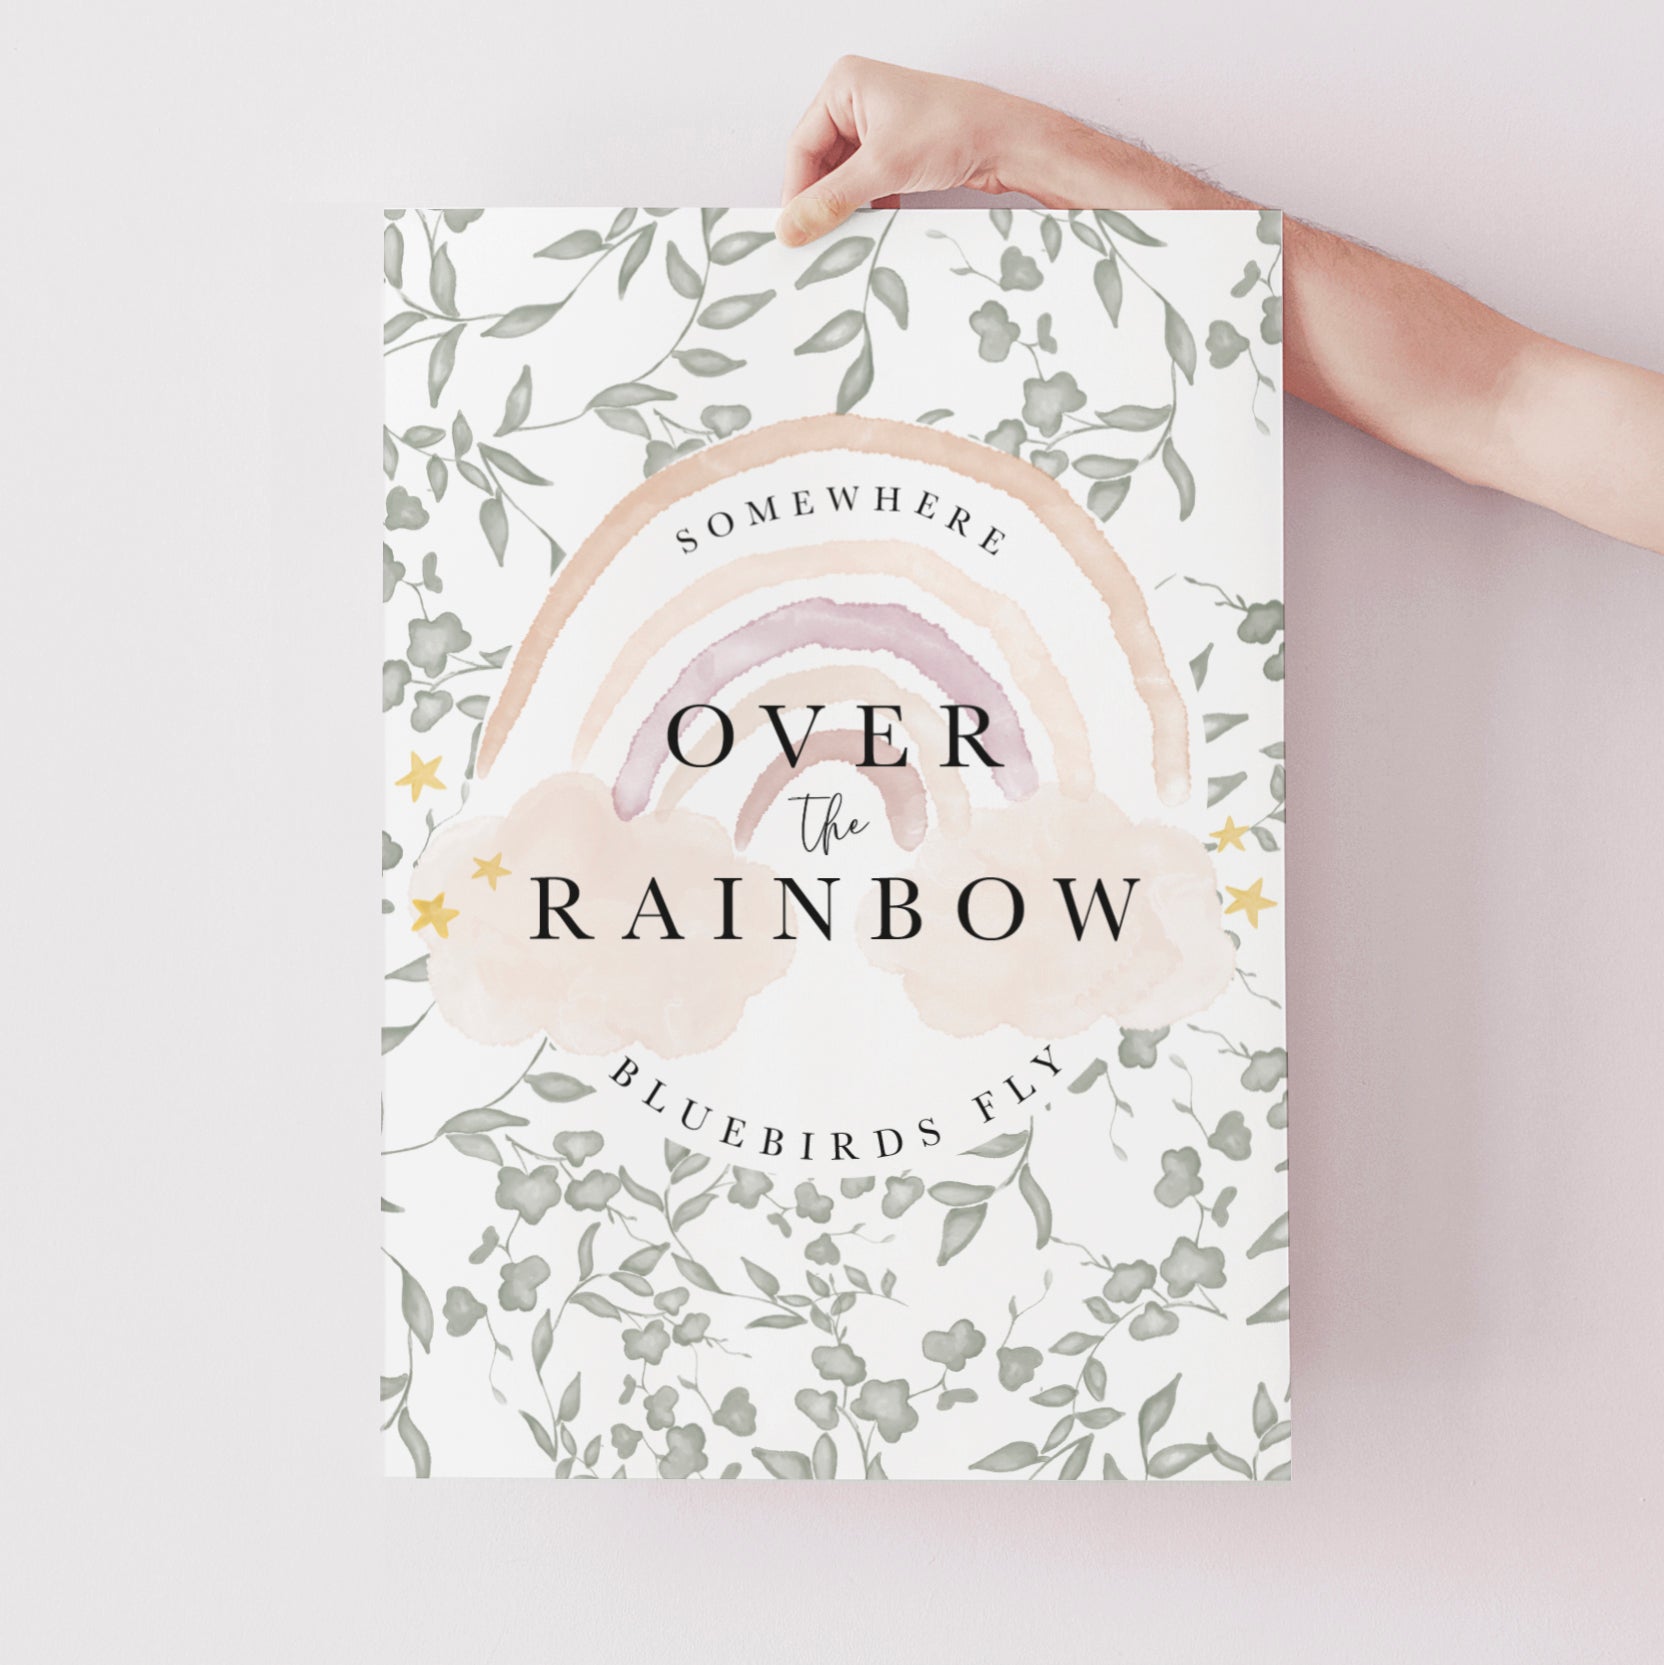 Over the rainbow art print UK